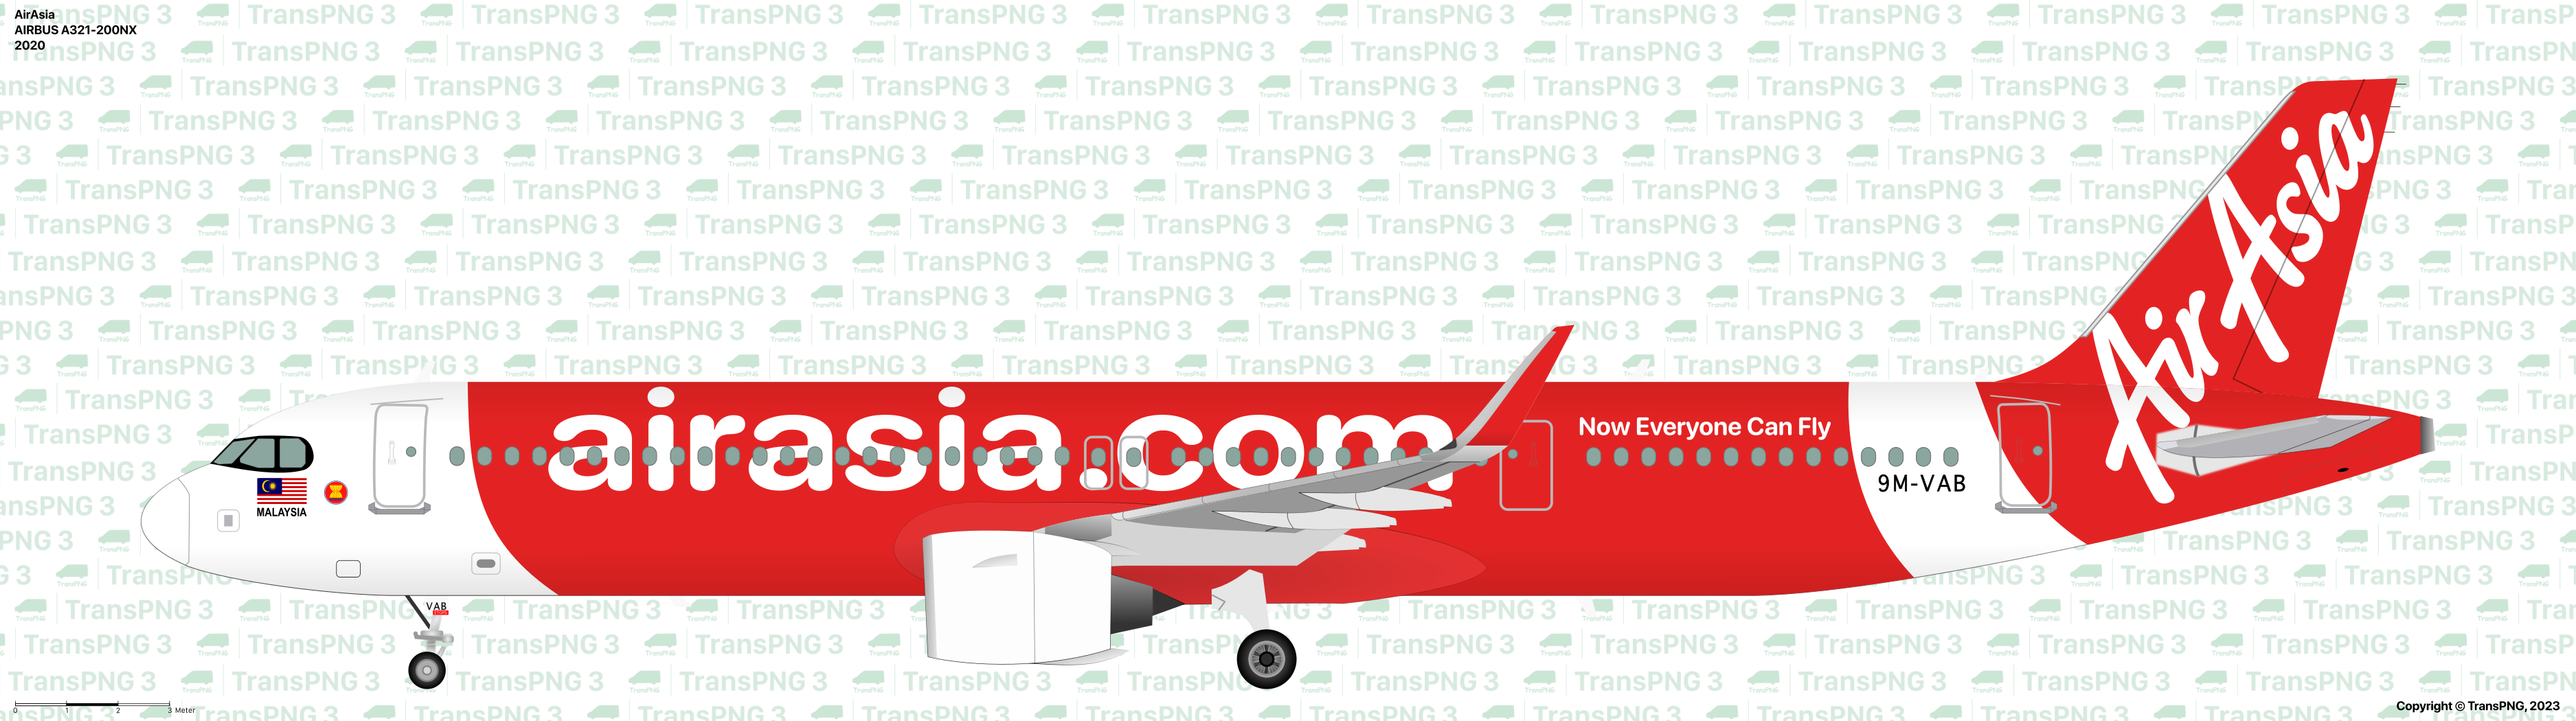 TransPNG.net | 分享世界各地多種交通工具的優秀繪圖 - 客機 53143444762_325a08c2af_o